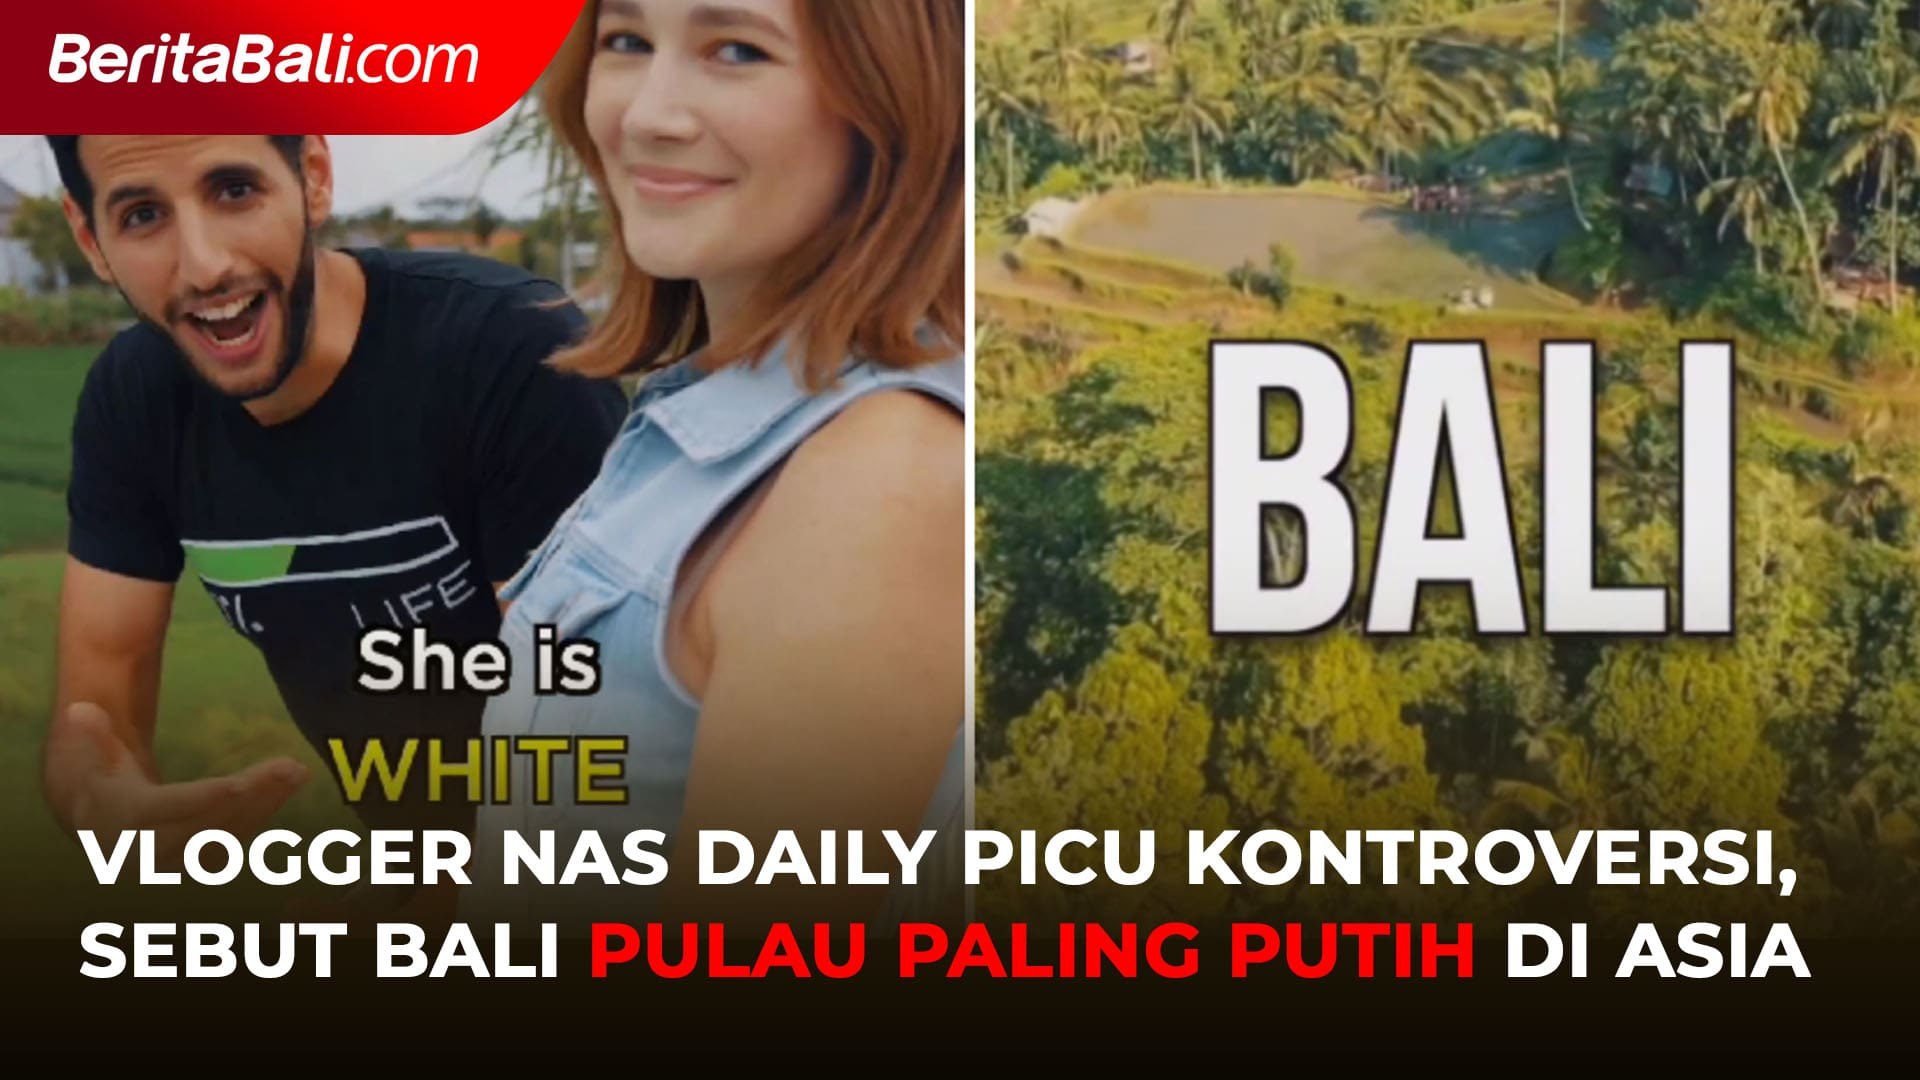 Vlogger Nas Daily Picu Kontroversi, Sebut Bali Pulau Paling Putih di Asia